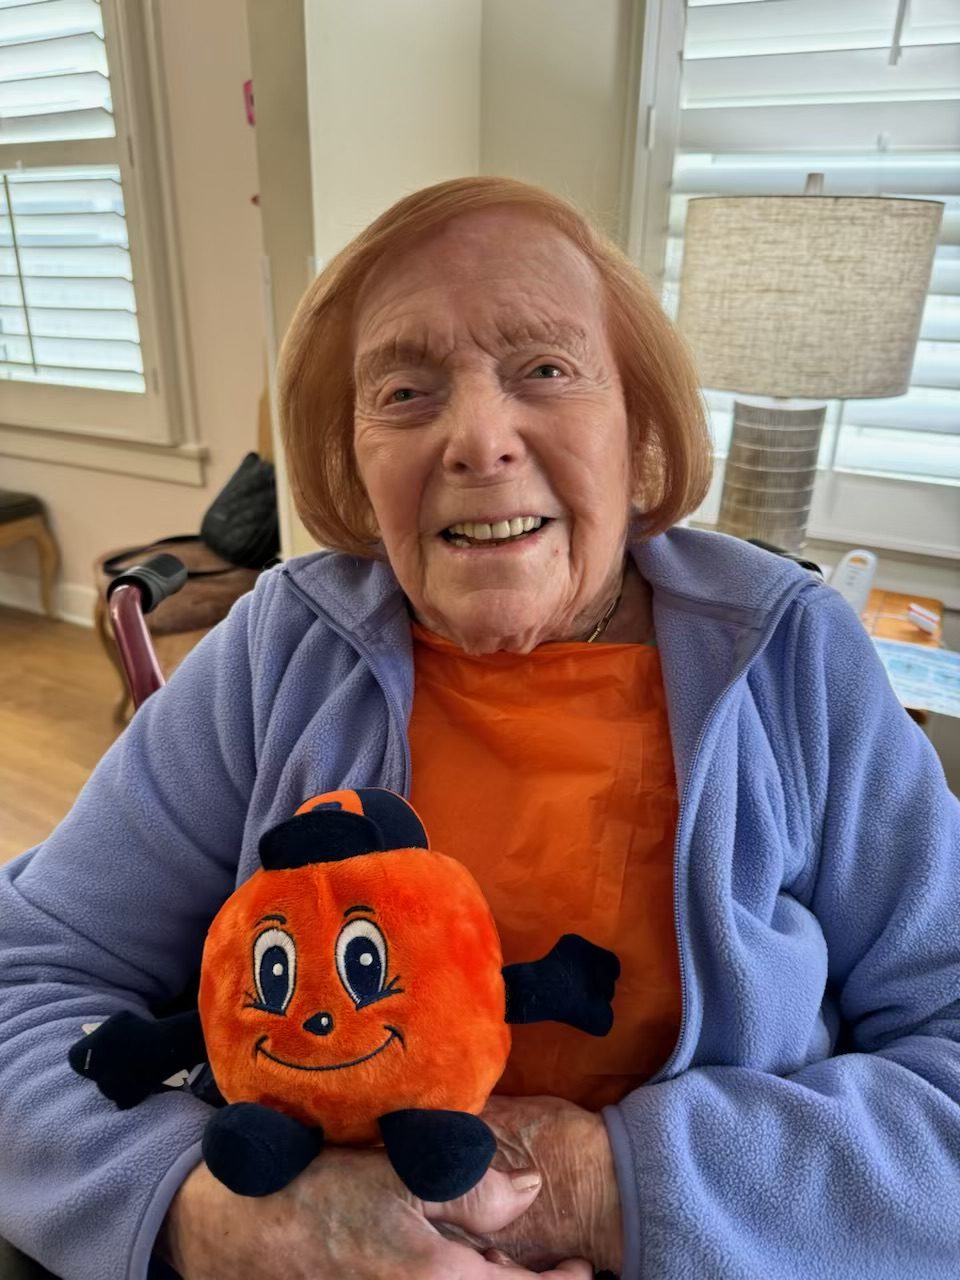 Woman sitting down smiling holding an Otto the Orange stuffed animal. 